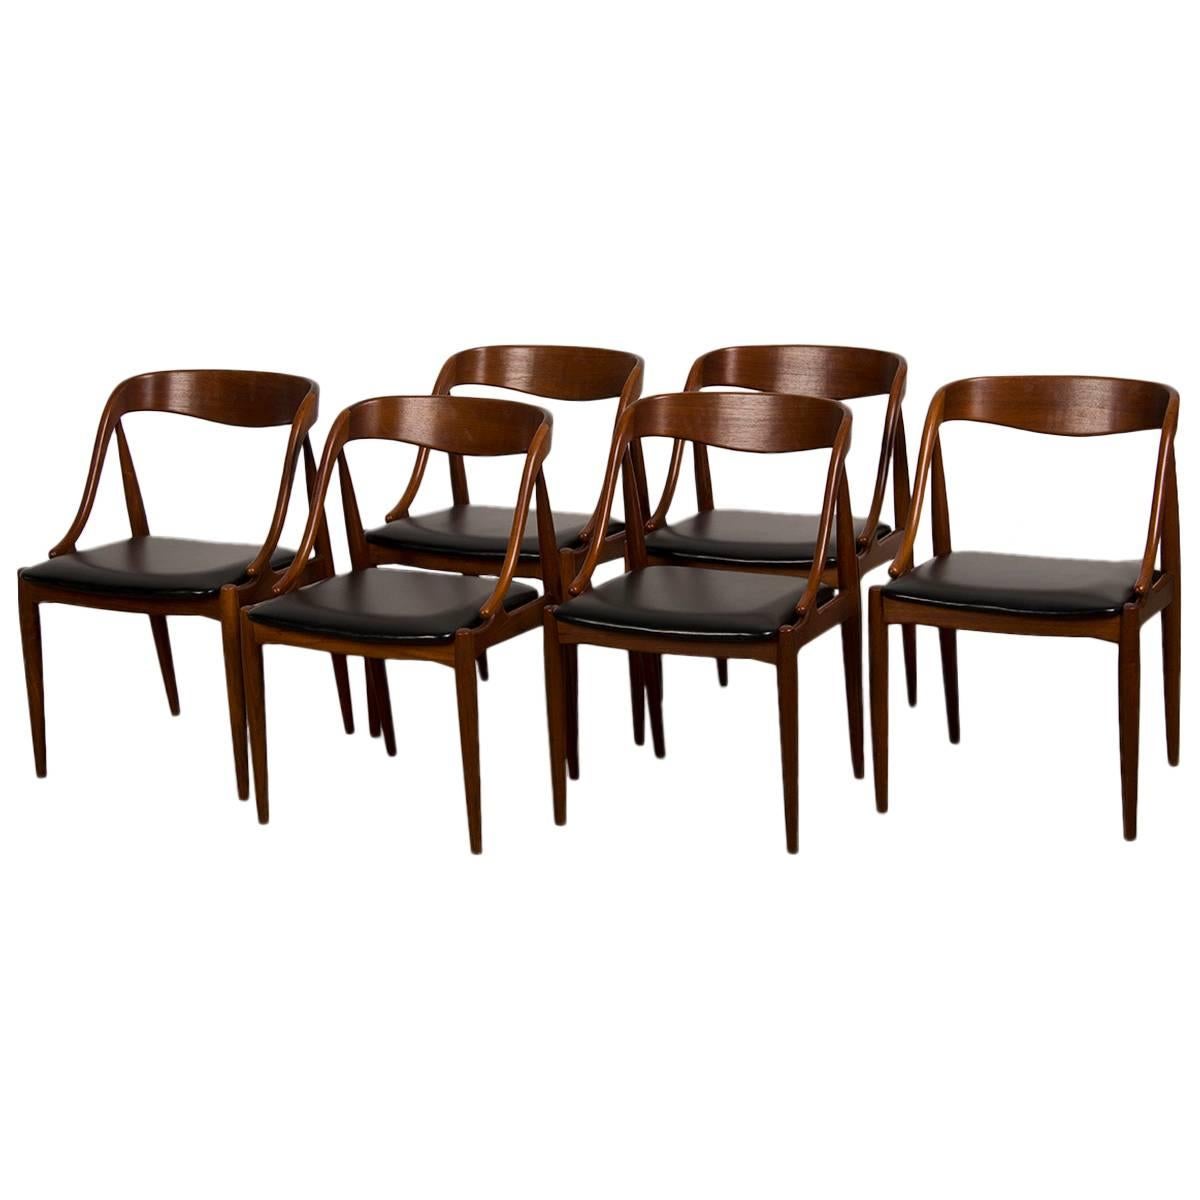 Set Six Teak Armchairs with Leather Seats by Søborg Møbelfabrik, Denmark